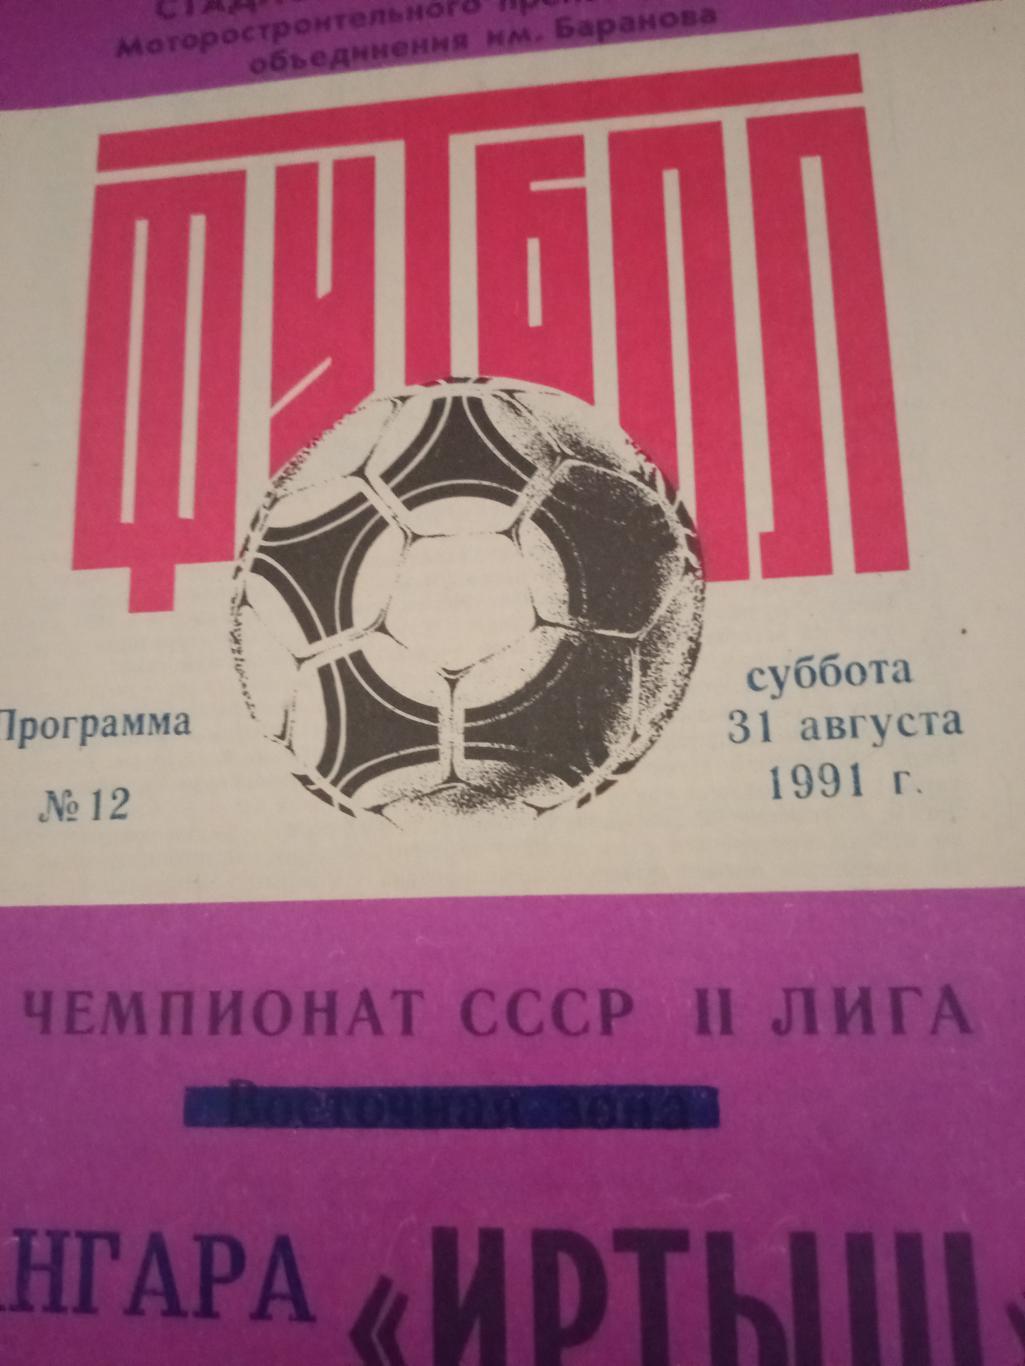 Иртыш Омск - Ангара Ангарск. 31 августа 1991 год